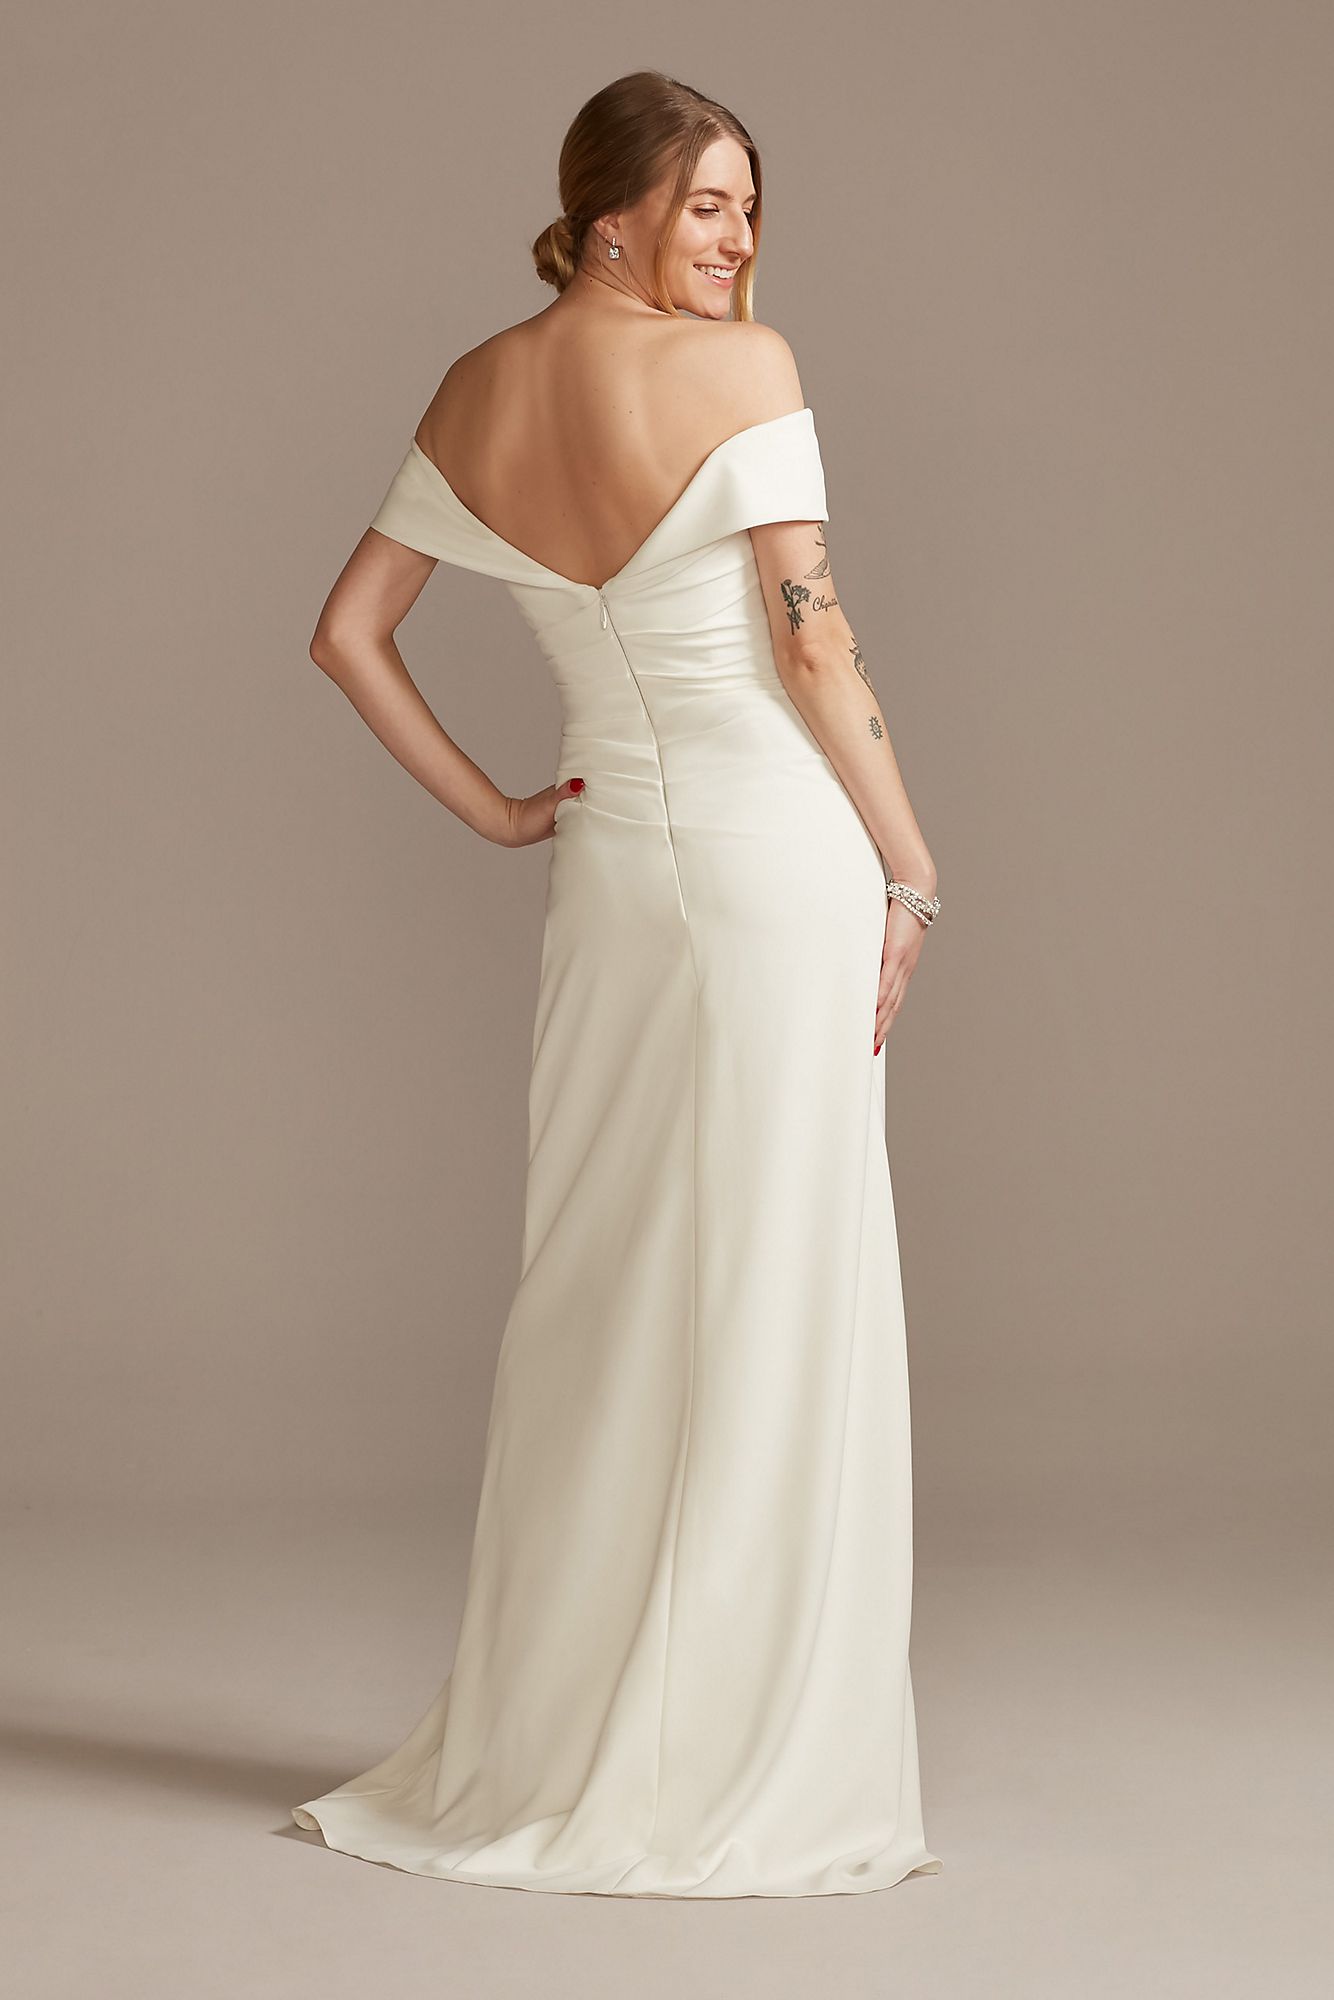 Crepe Off-the-Shoulder Sheath Wedding Dress DB Studio WG4033